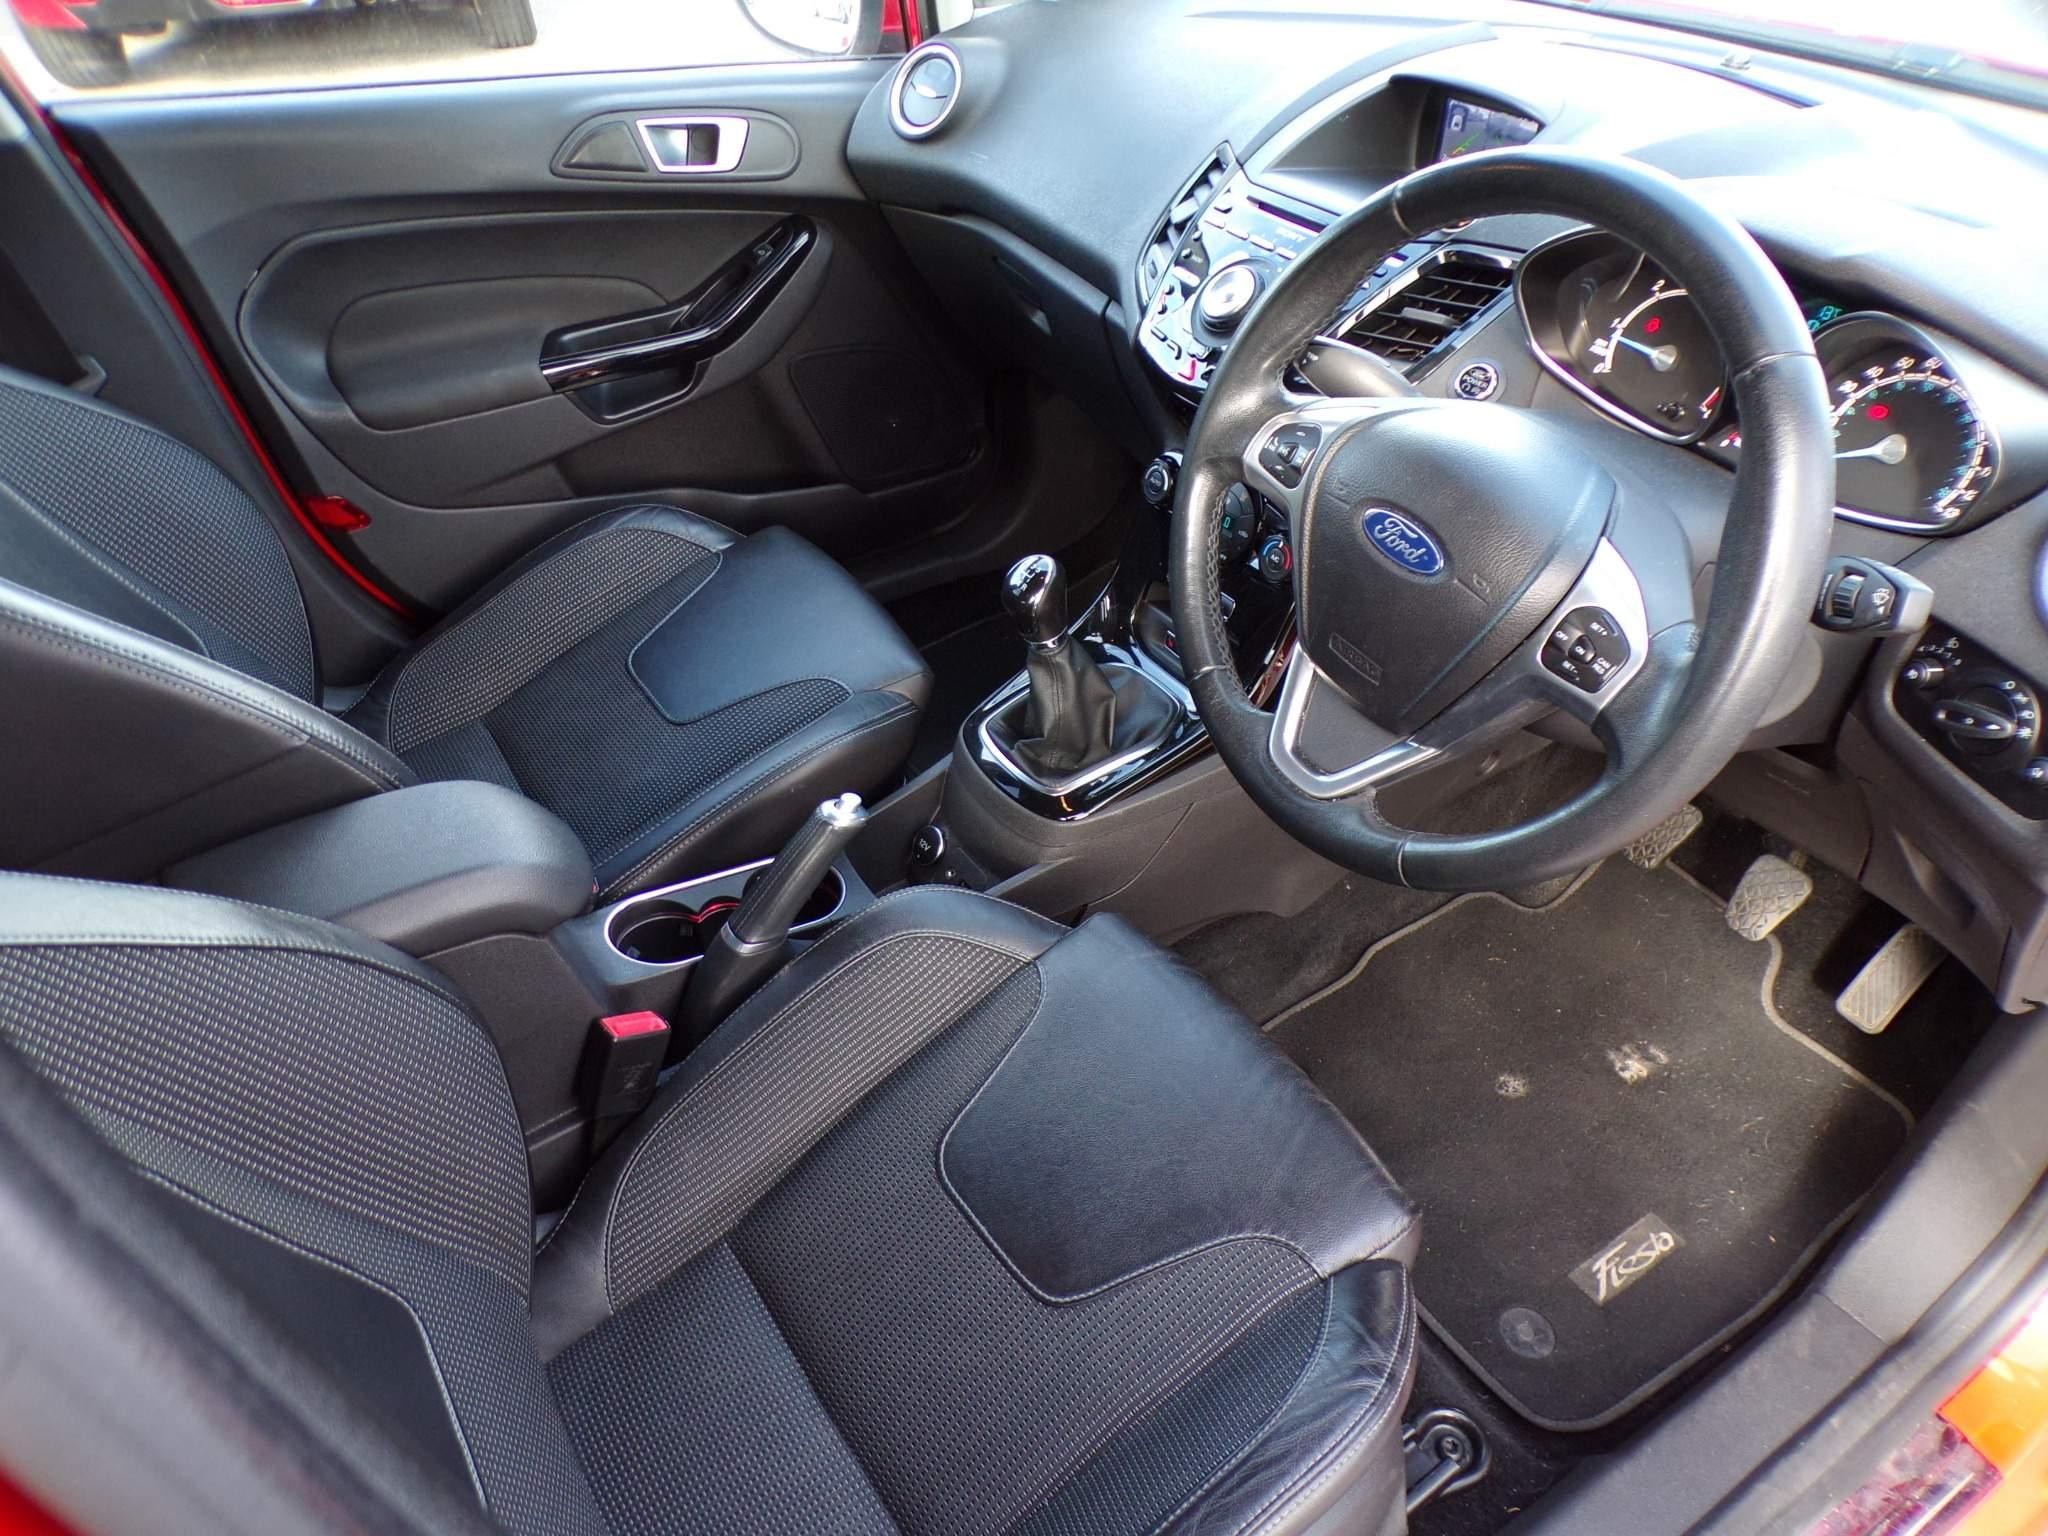 Ford Fiesta 1.6 TDCi Titanium X Euro 5 5dr (FX15MKP) image 11